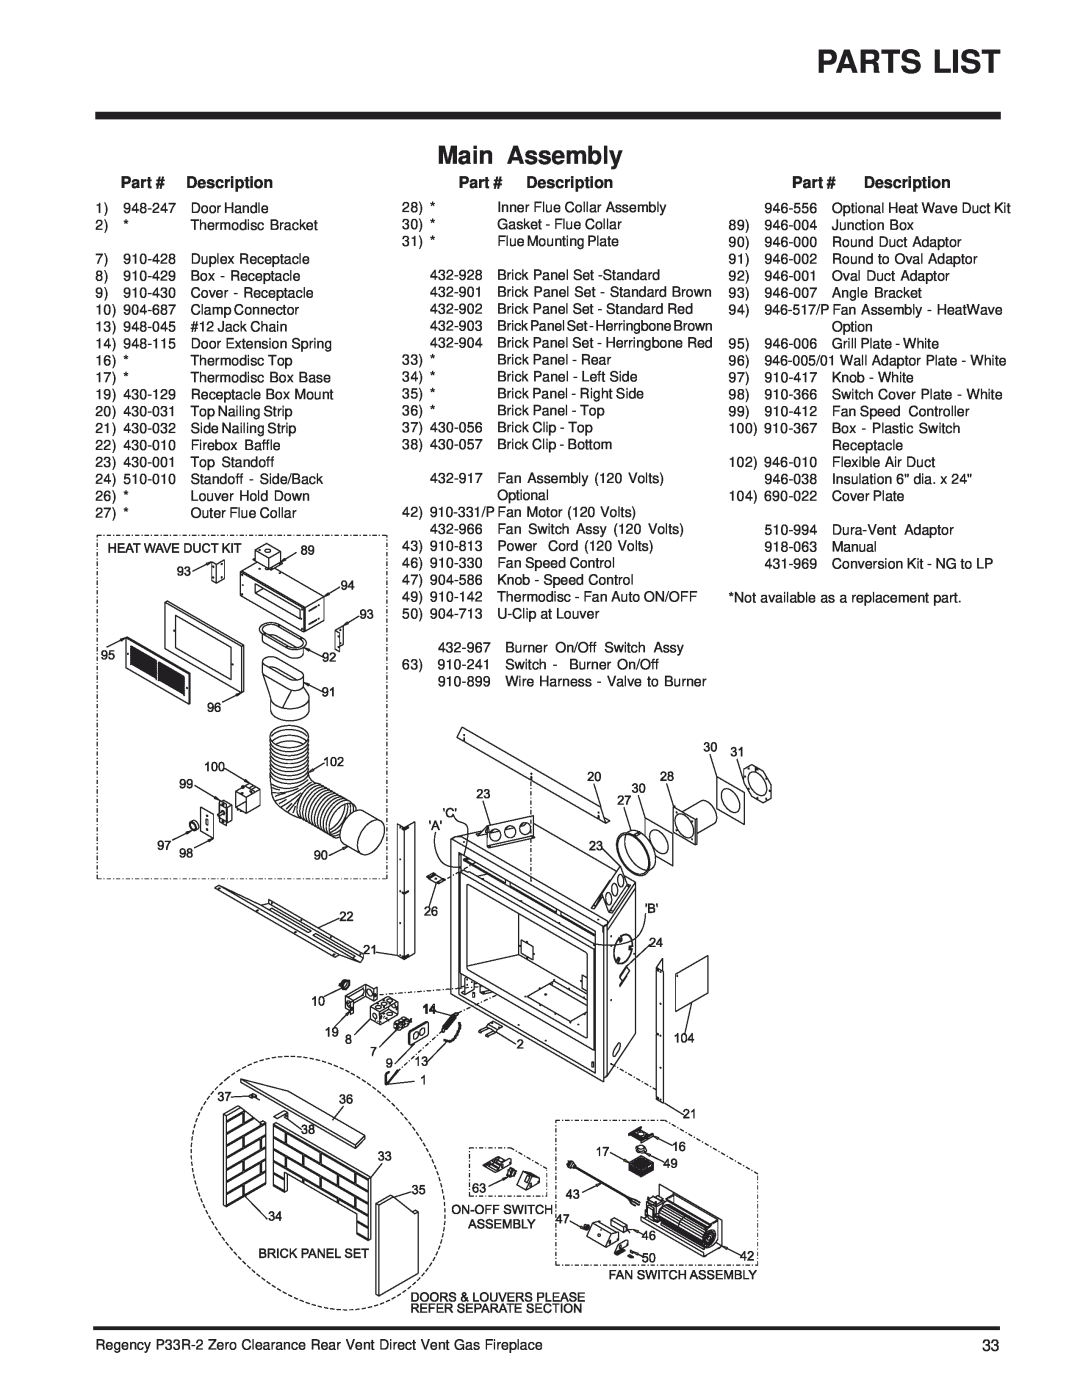 Regency P33R-NG2, P33R-LP2 installation manual Parts List, Main Assembly, Description 